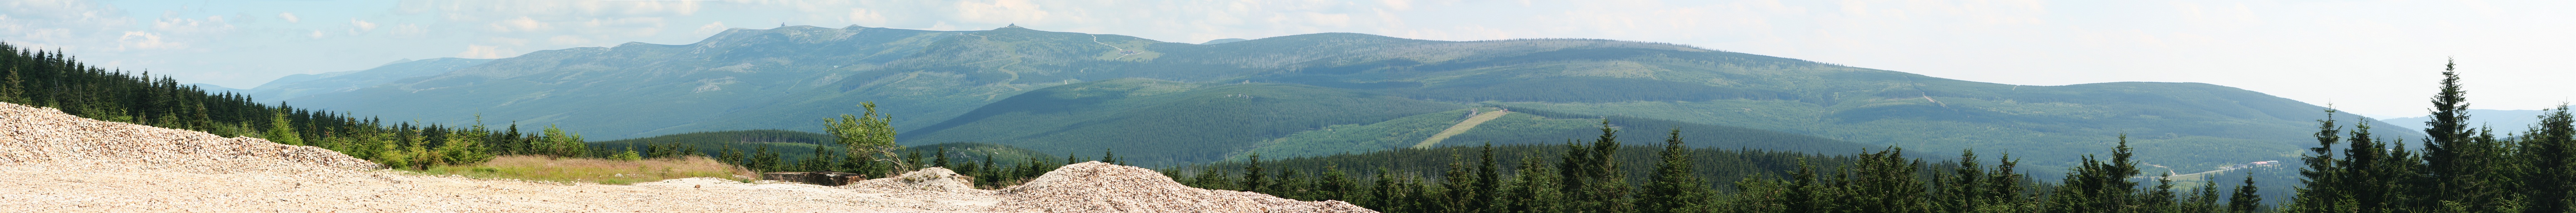 Panorama of the Karkonosze (Giant Mountains) from the 'Stanislaw' open-pit quartz mine in the Izera Mountains